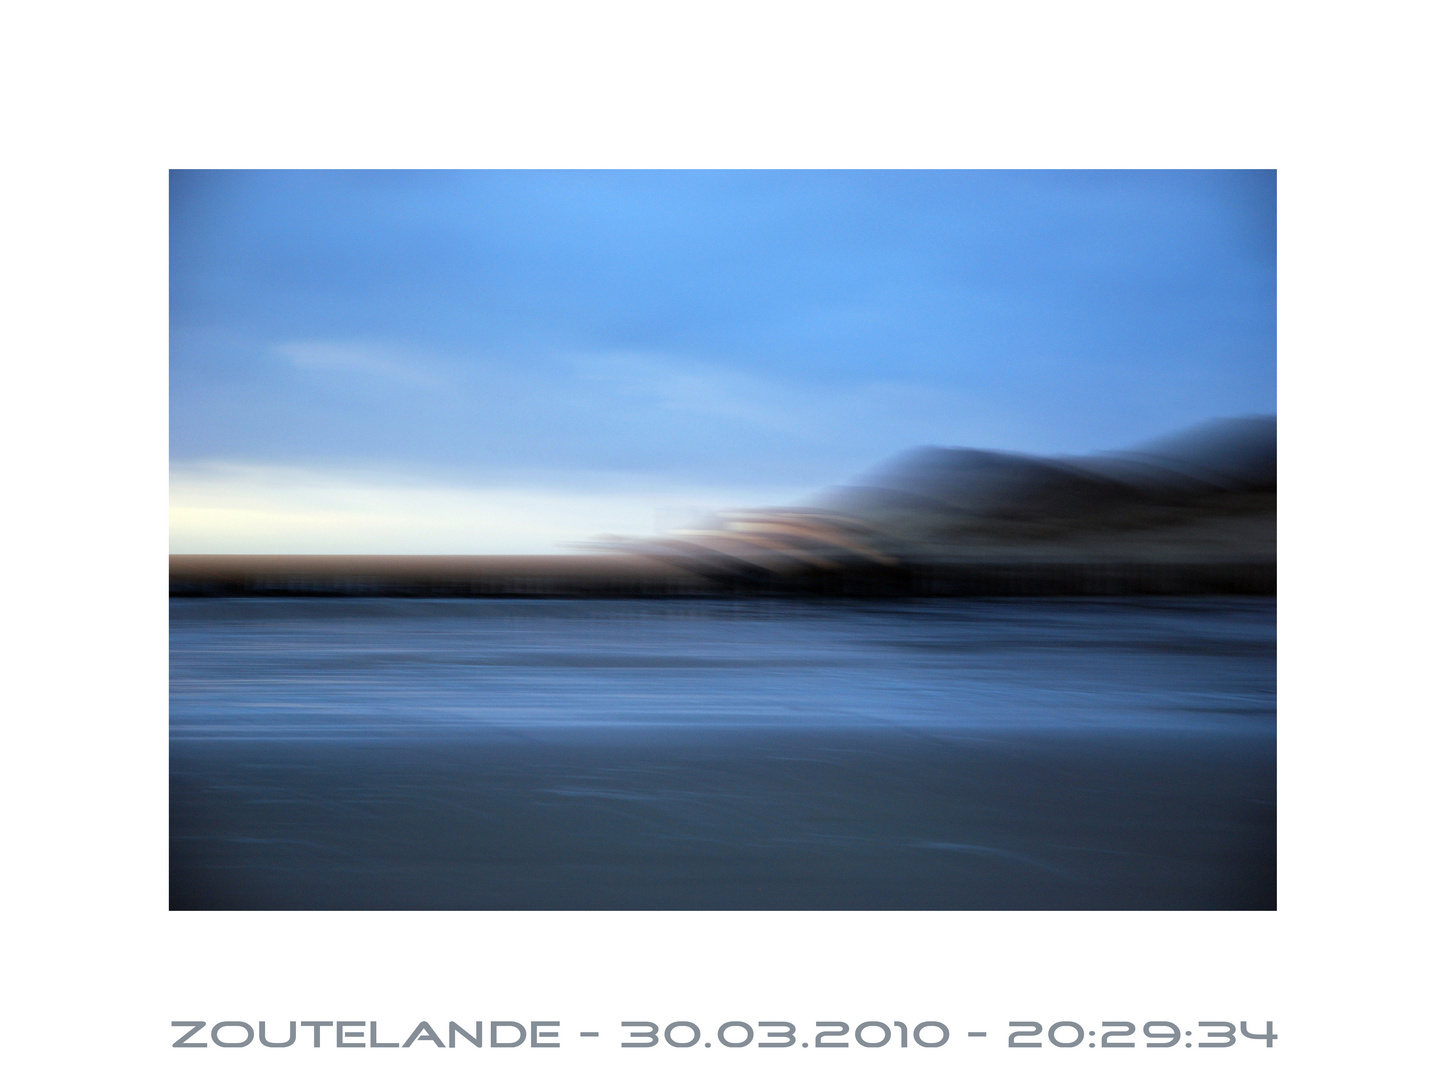 zoutelande - 30.03.2010 - 20:29:34